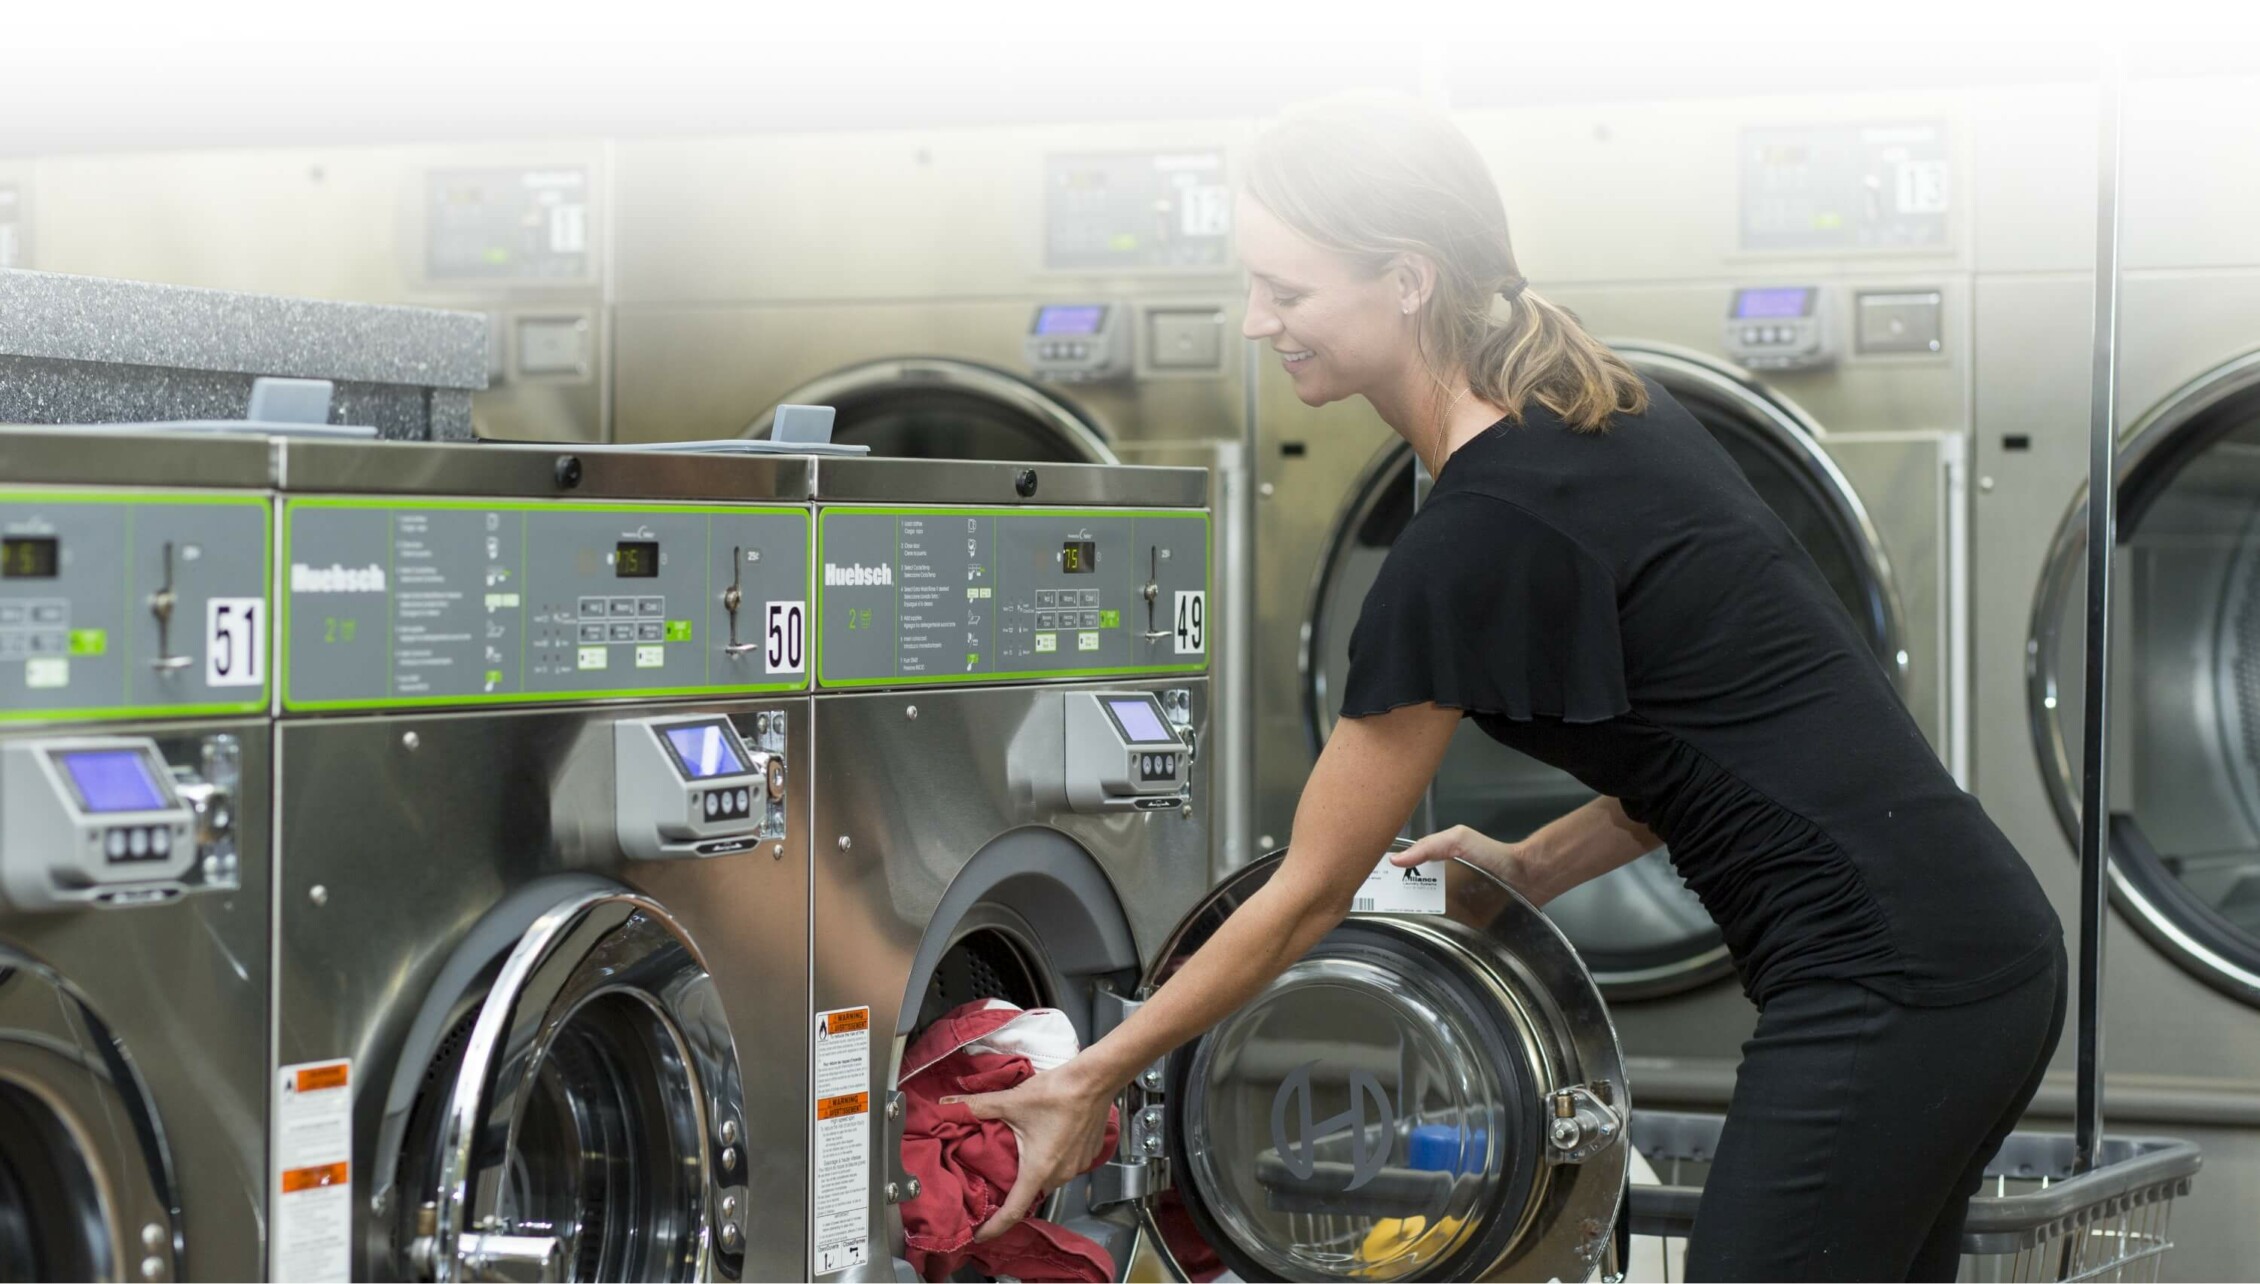 woman putting laundry into machine